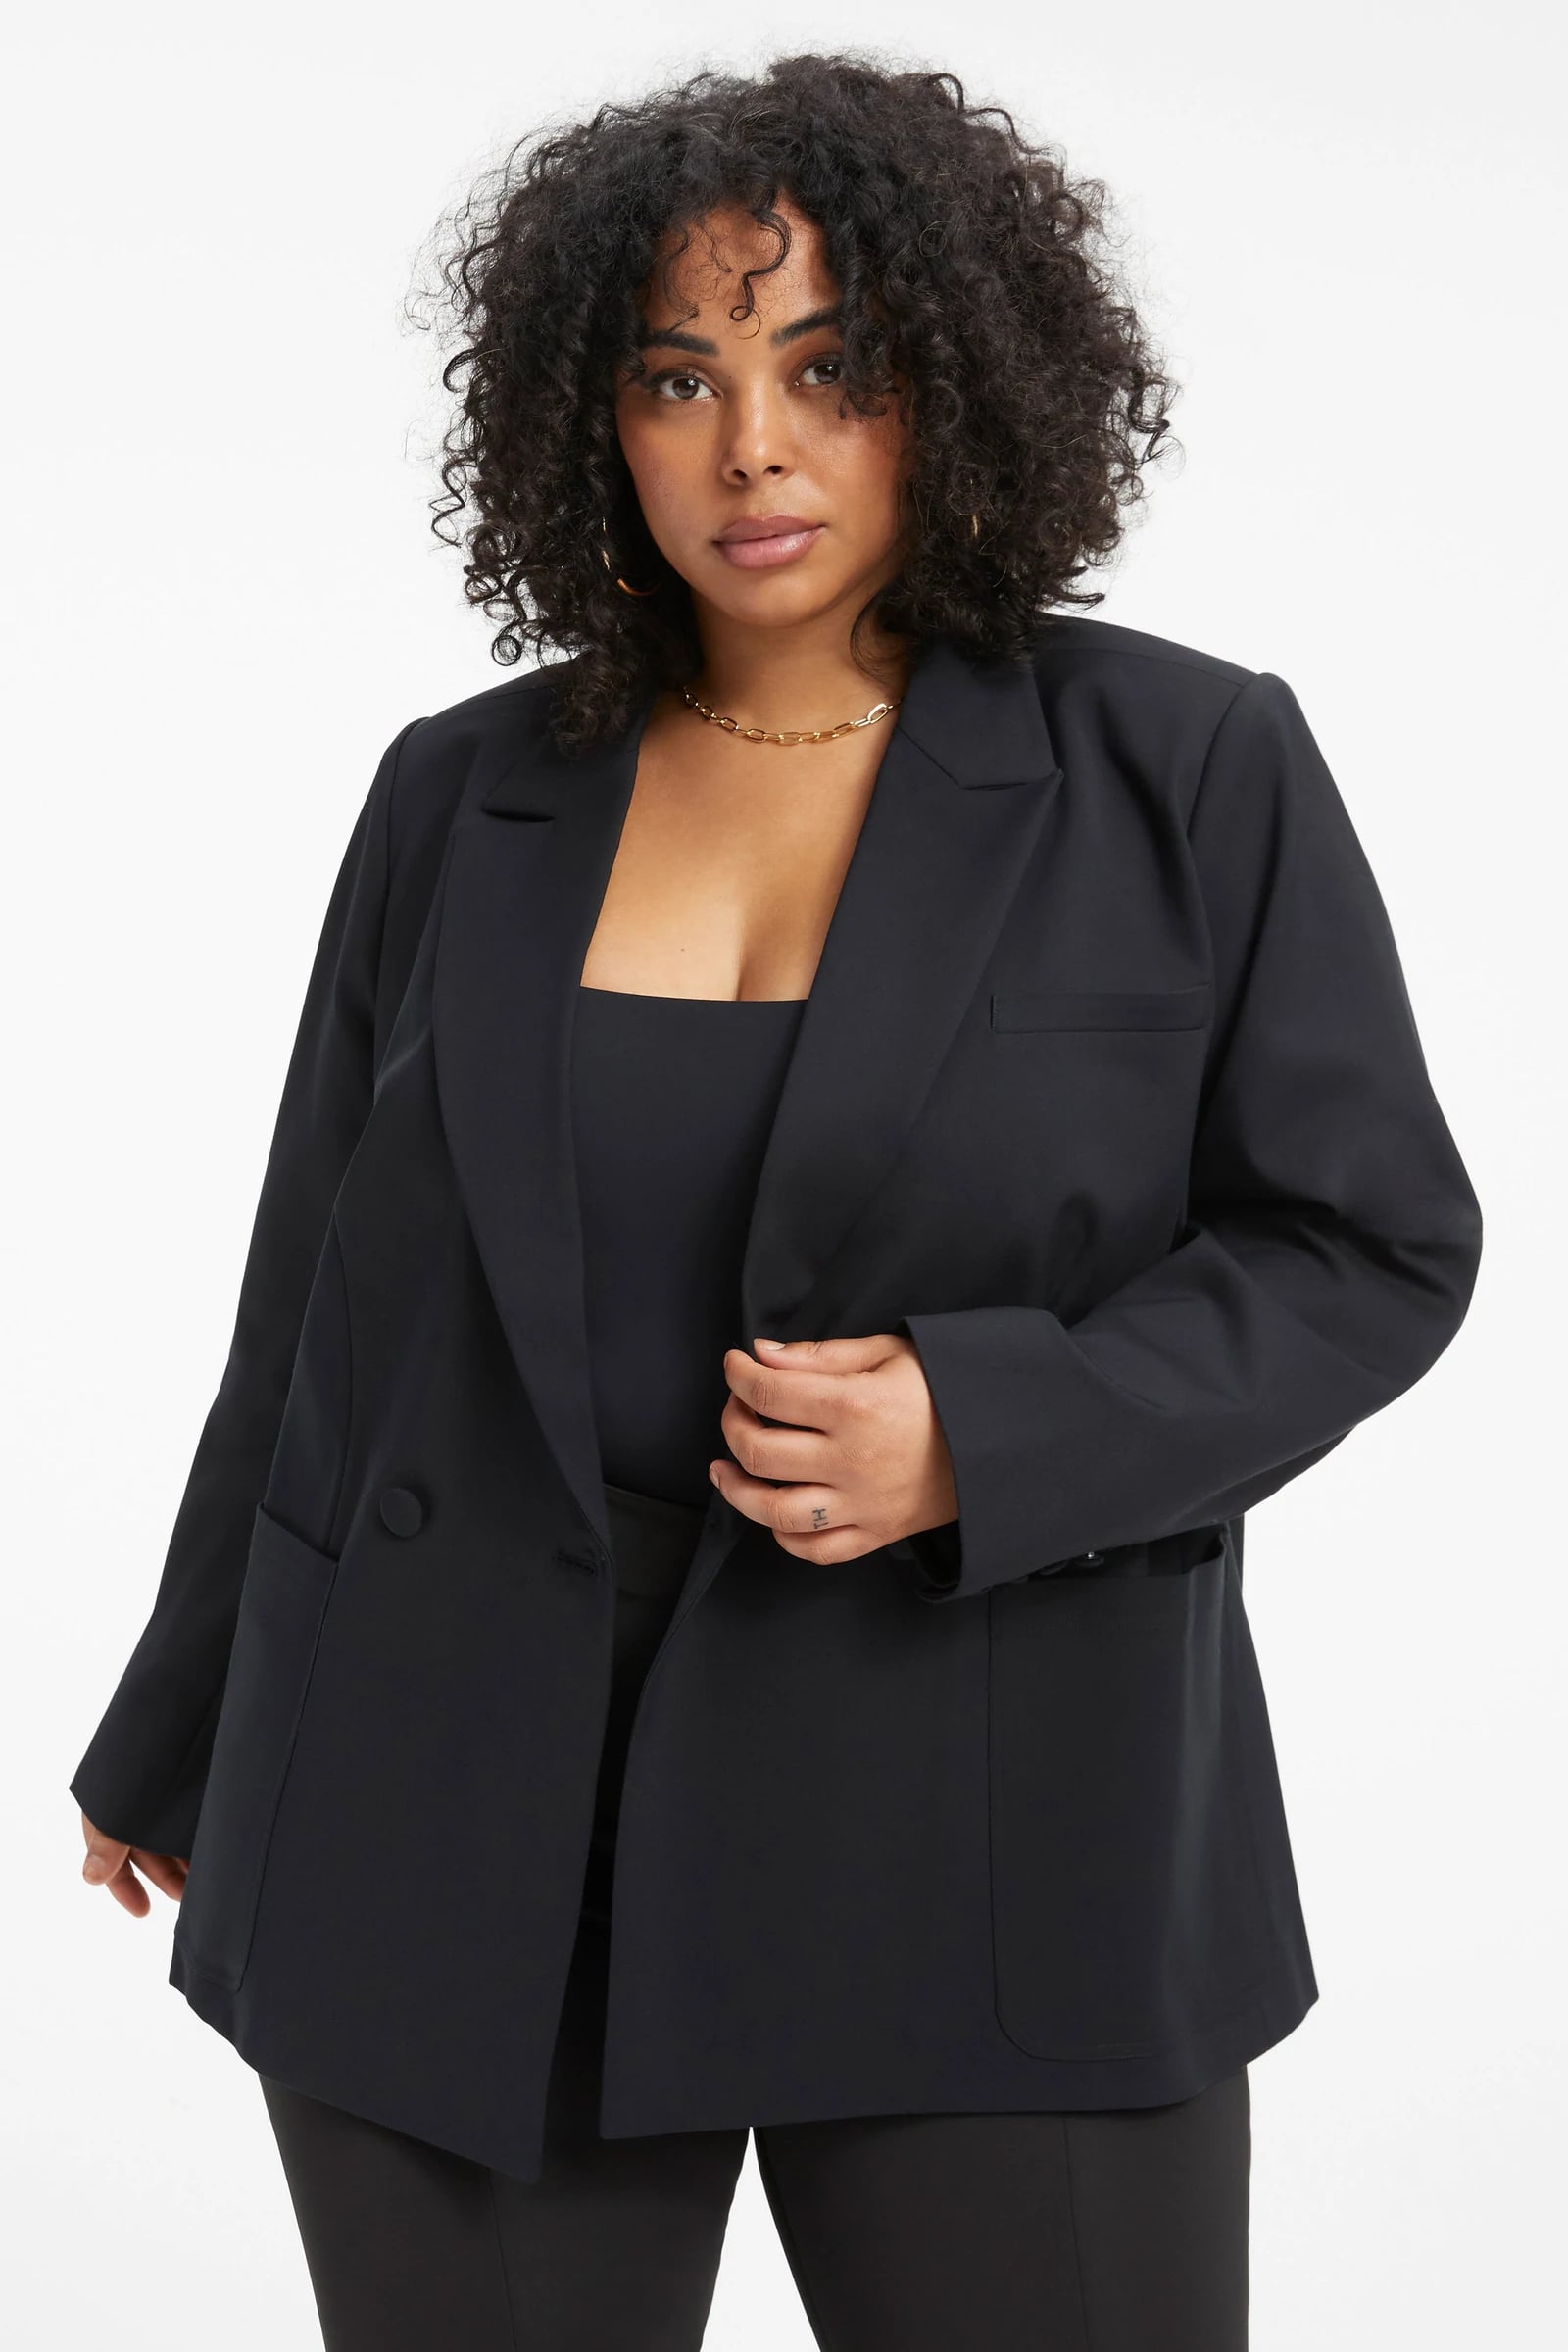 Plus Size Women Black Suits Formal Ladies Office Work Wear Pieces Outfits